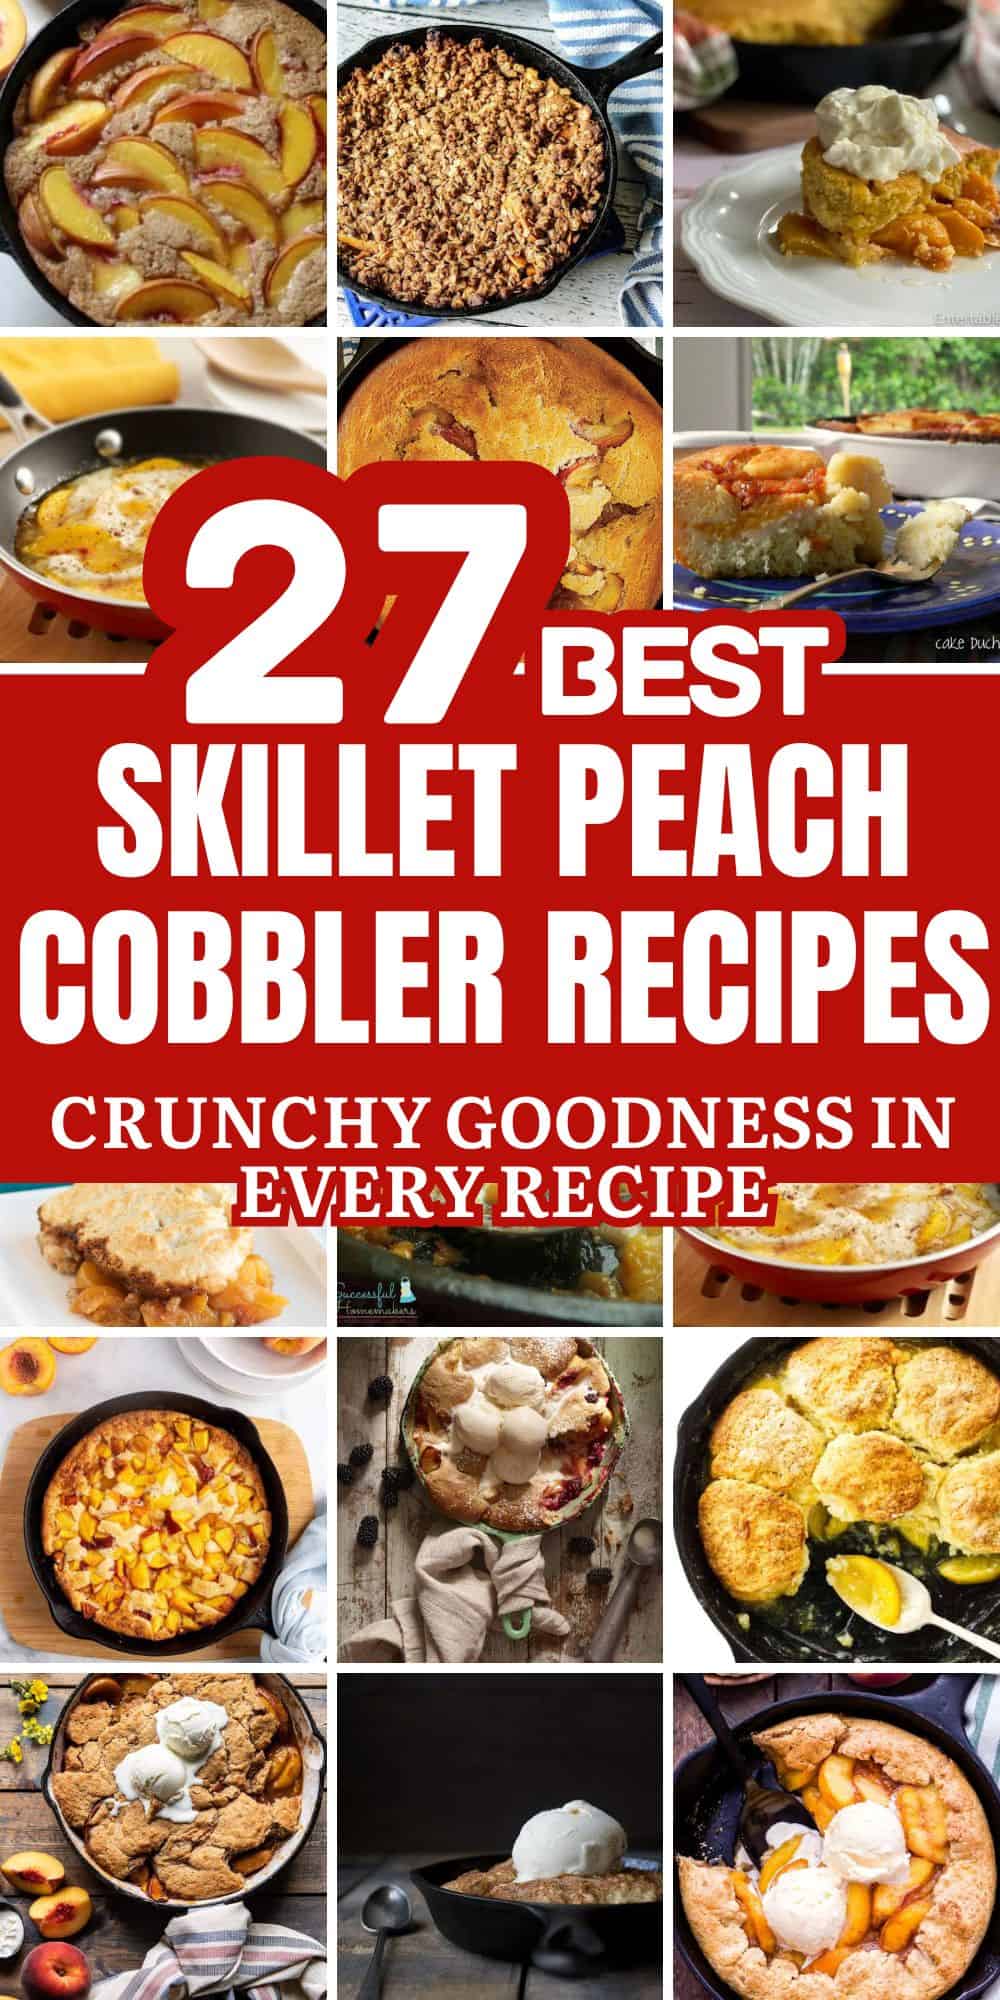 Skillet Peach Cobbler Recipes